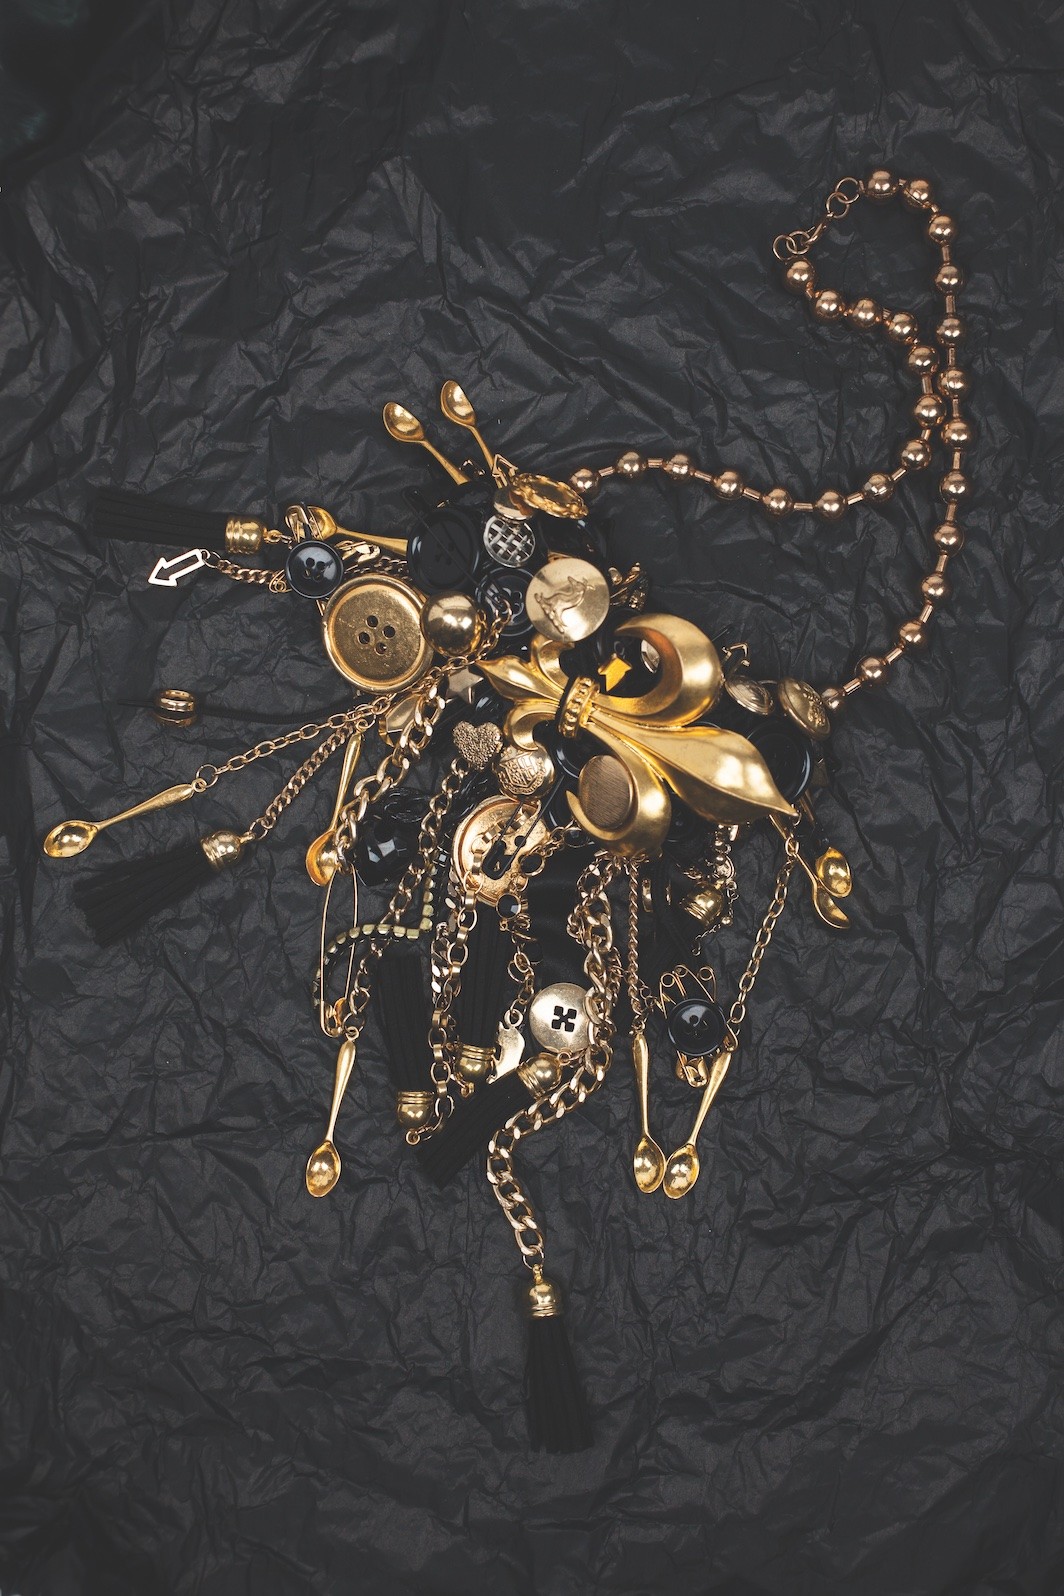 Judy Blame necklace, ca. 2014. Courtesy TrustJudyBlame